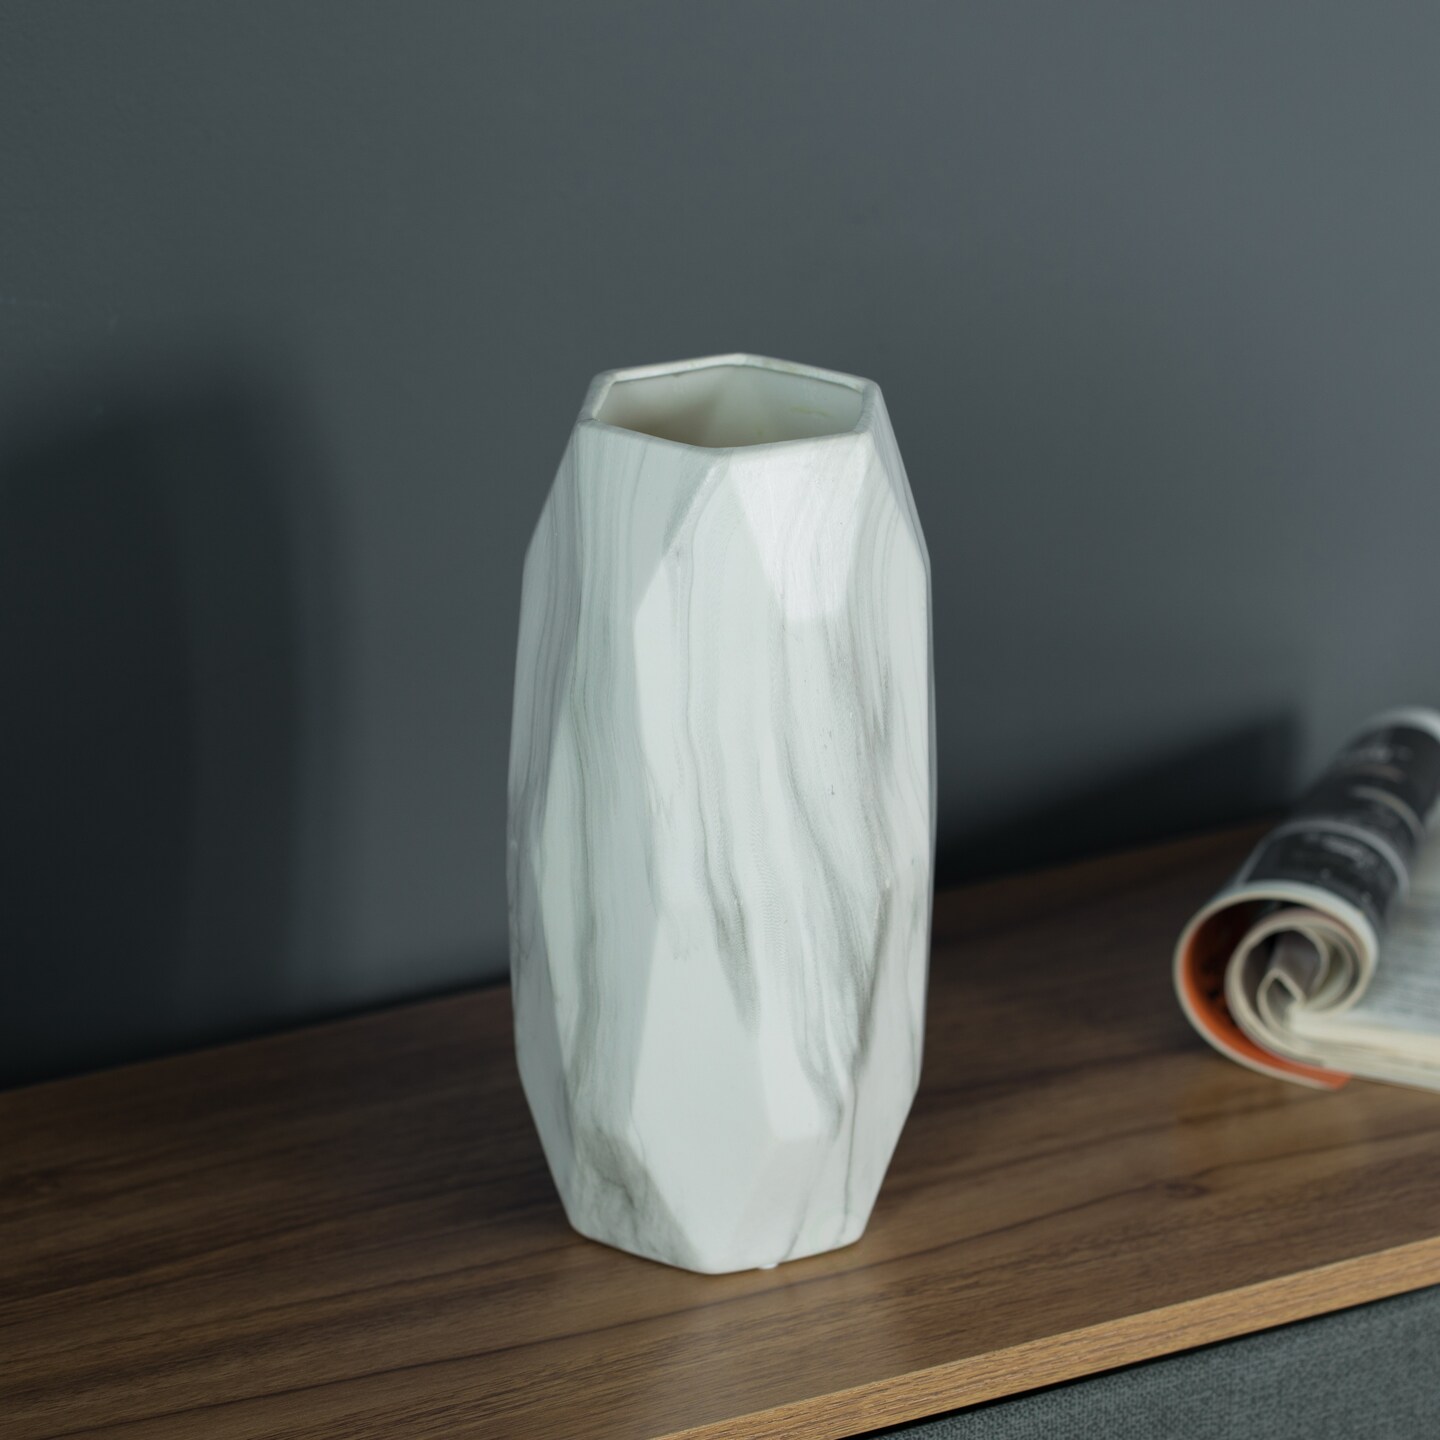 Contemporary Ceramic Marble Look Design Table Vase Geometric Flower Holder Decor